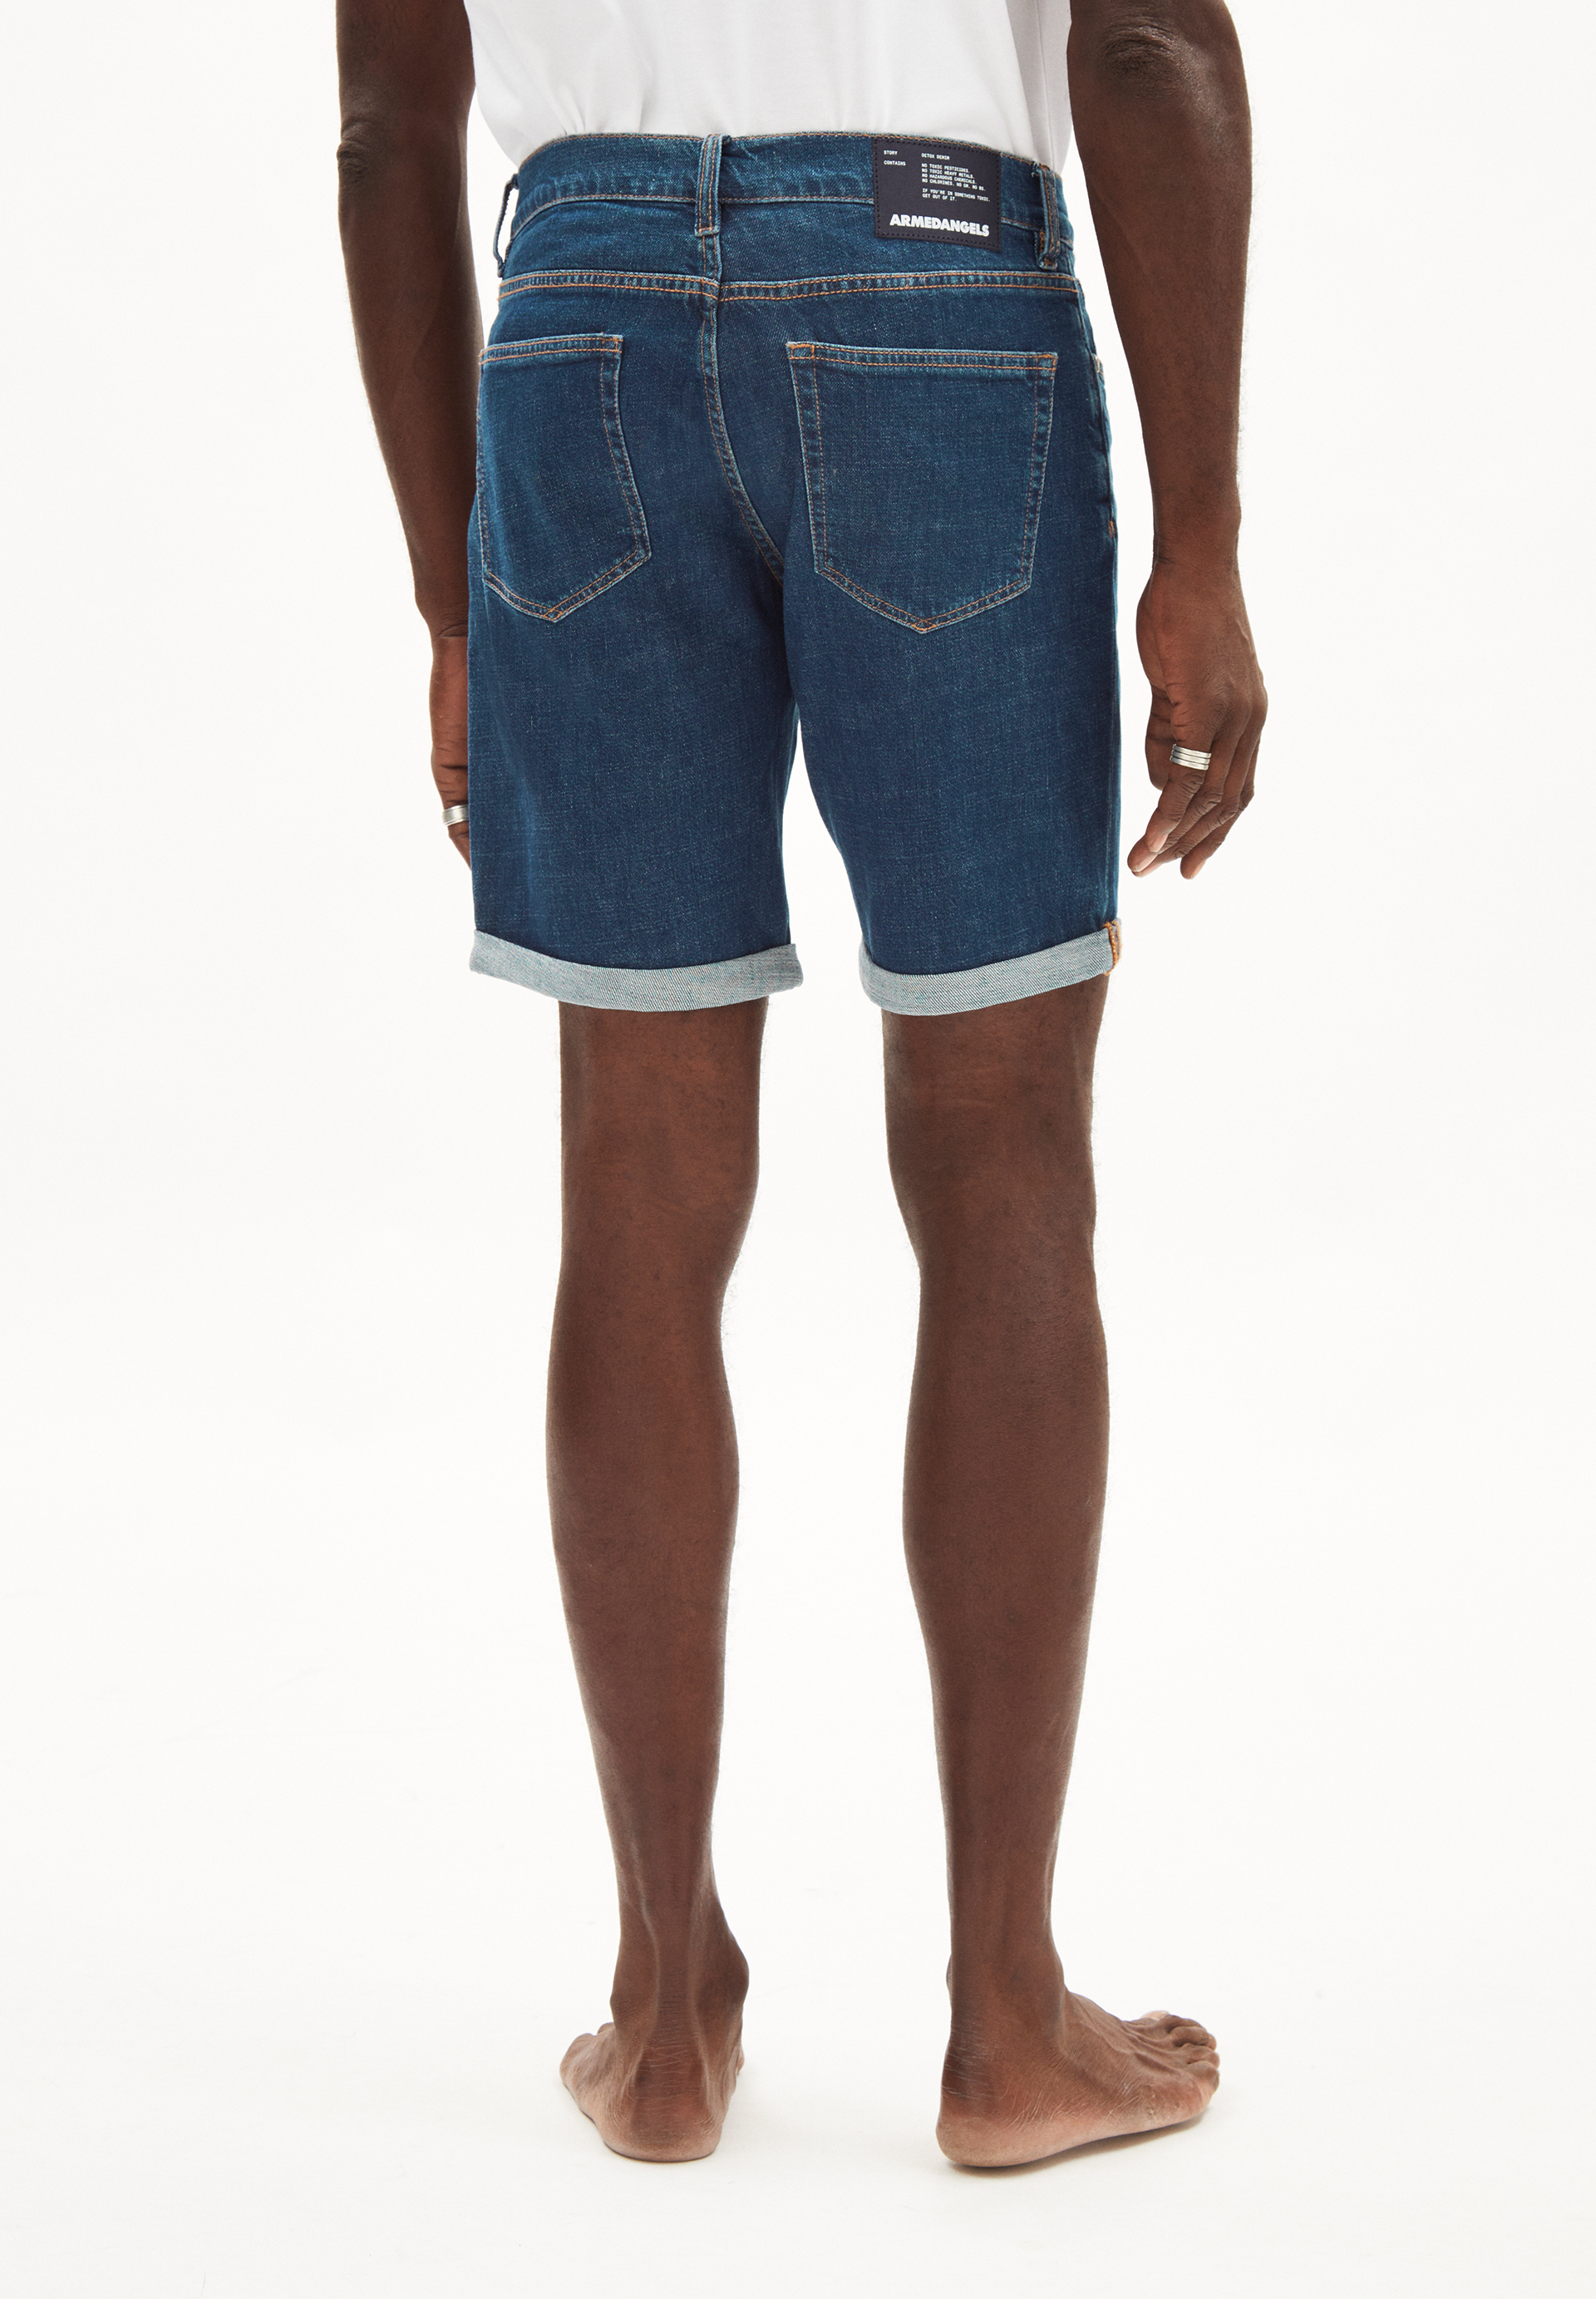 Jeans-Shorts NAAIL HEMP seven seas